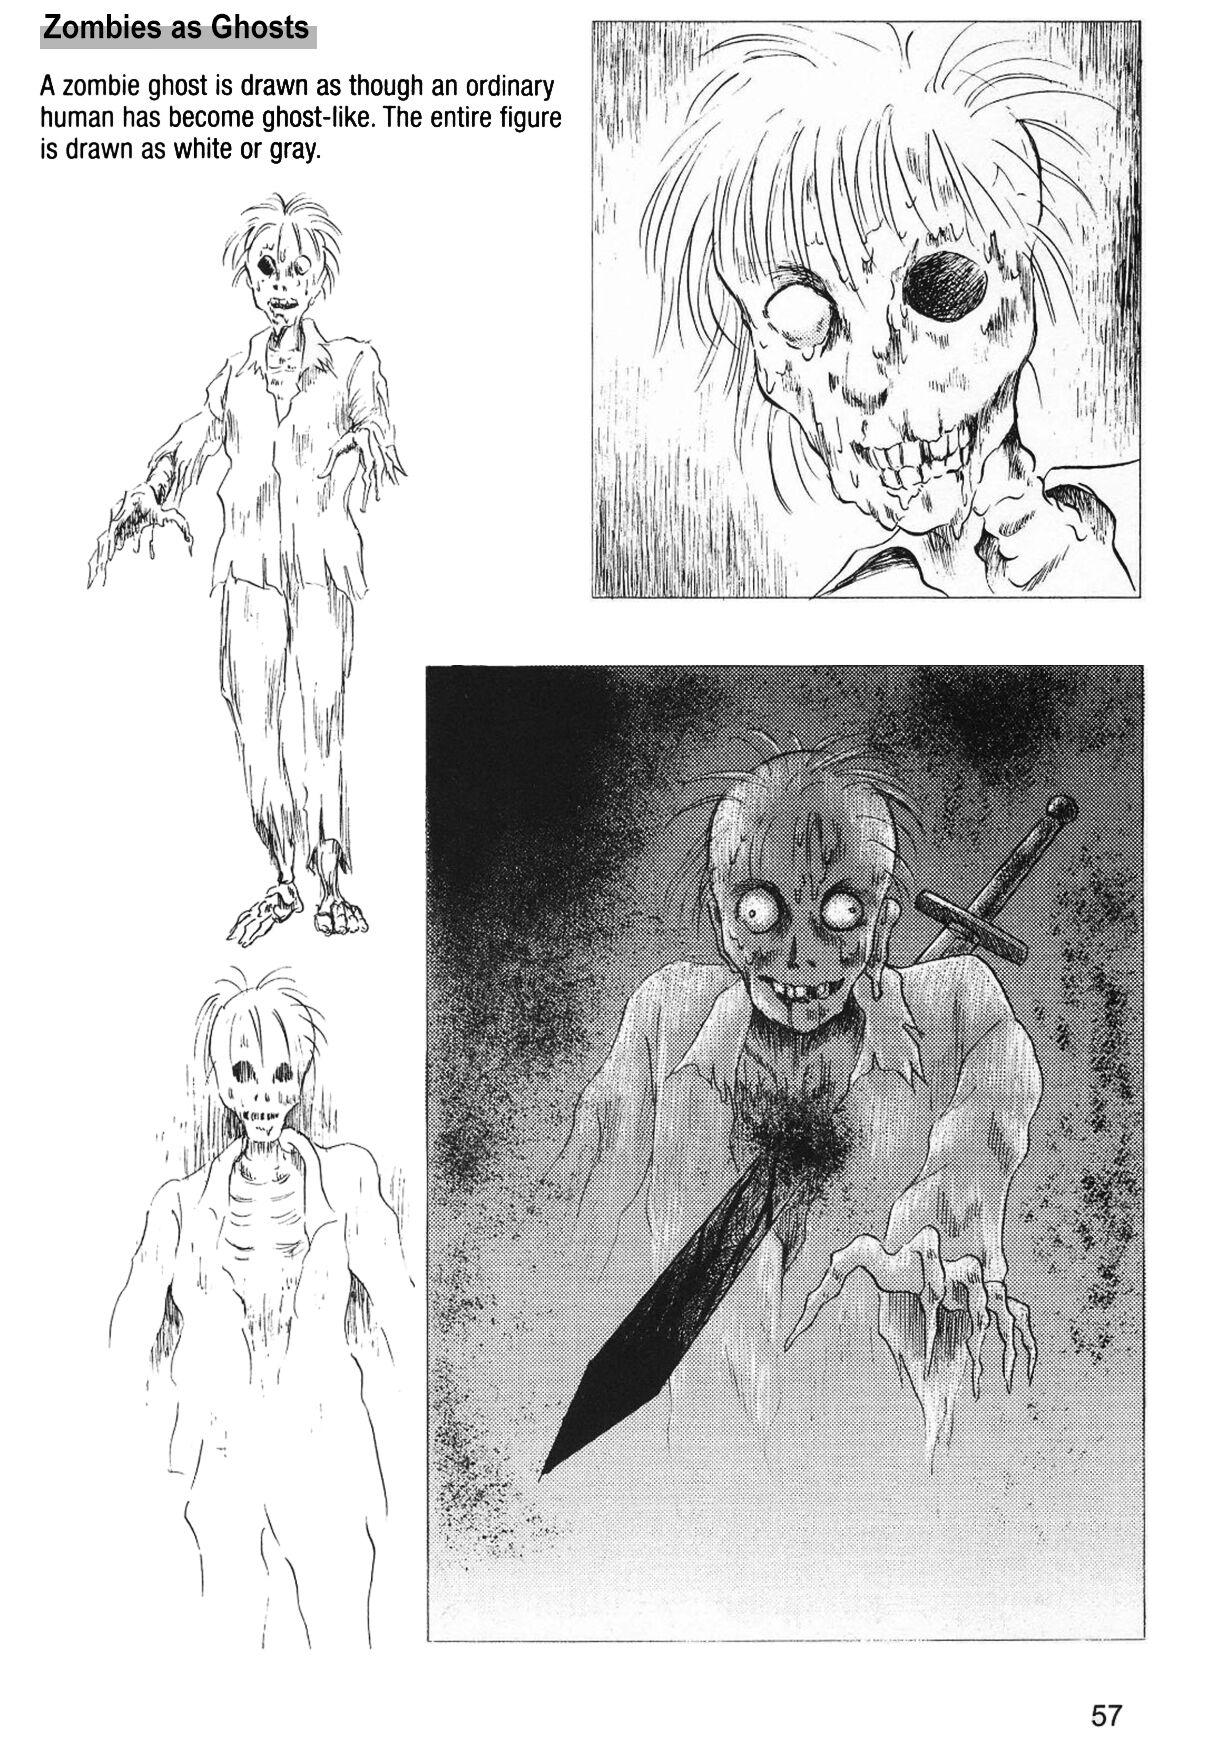 How to Draw Manga Vol. 24, Occult & Horror by Hikaru Hayashi 60